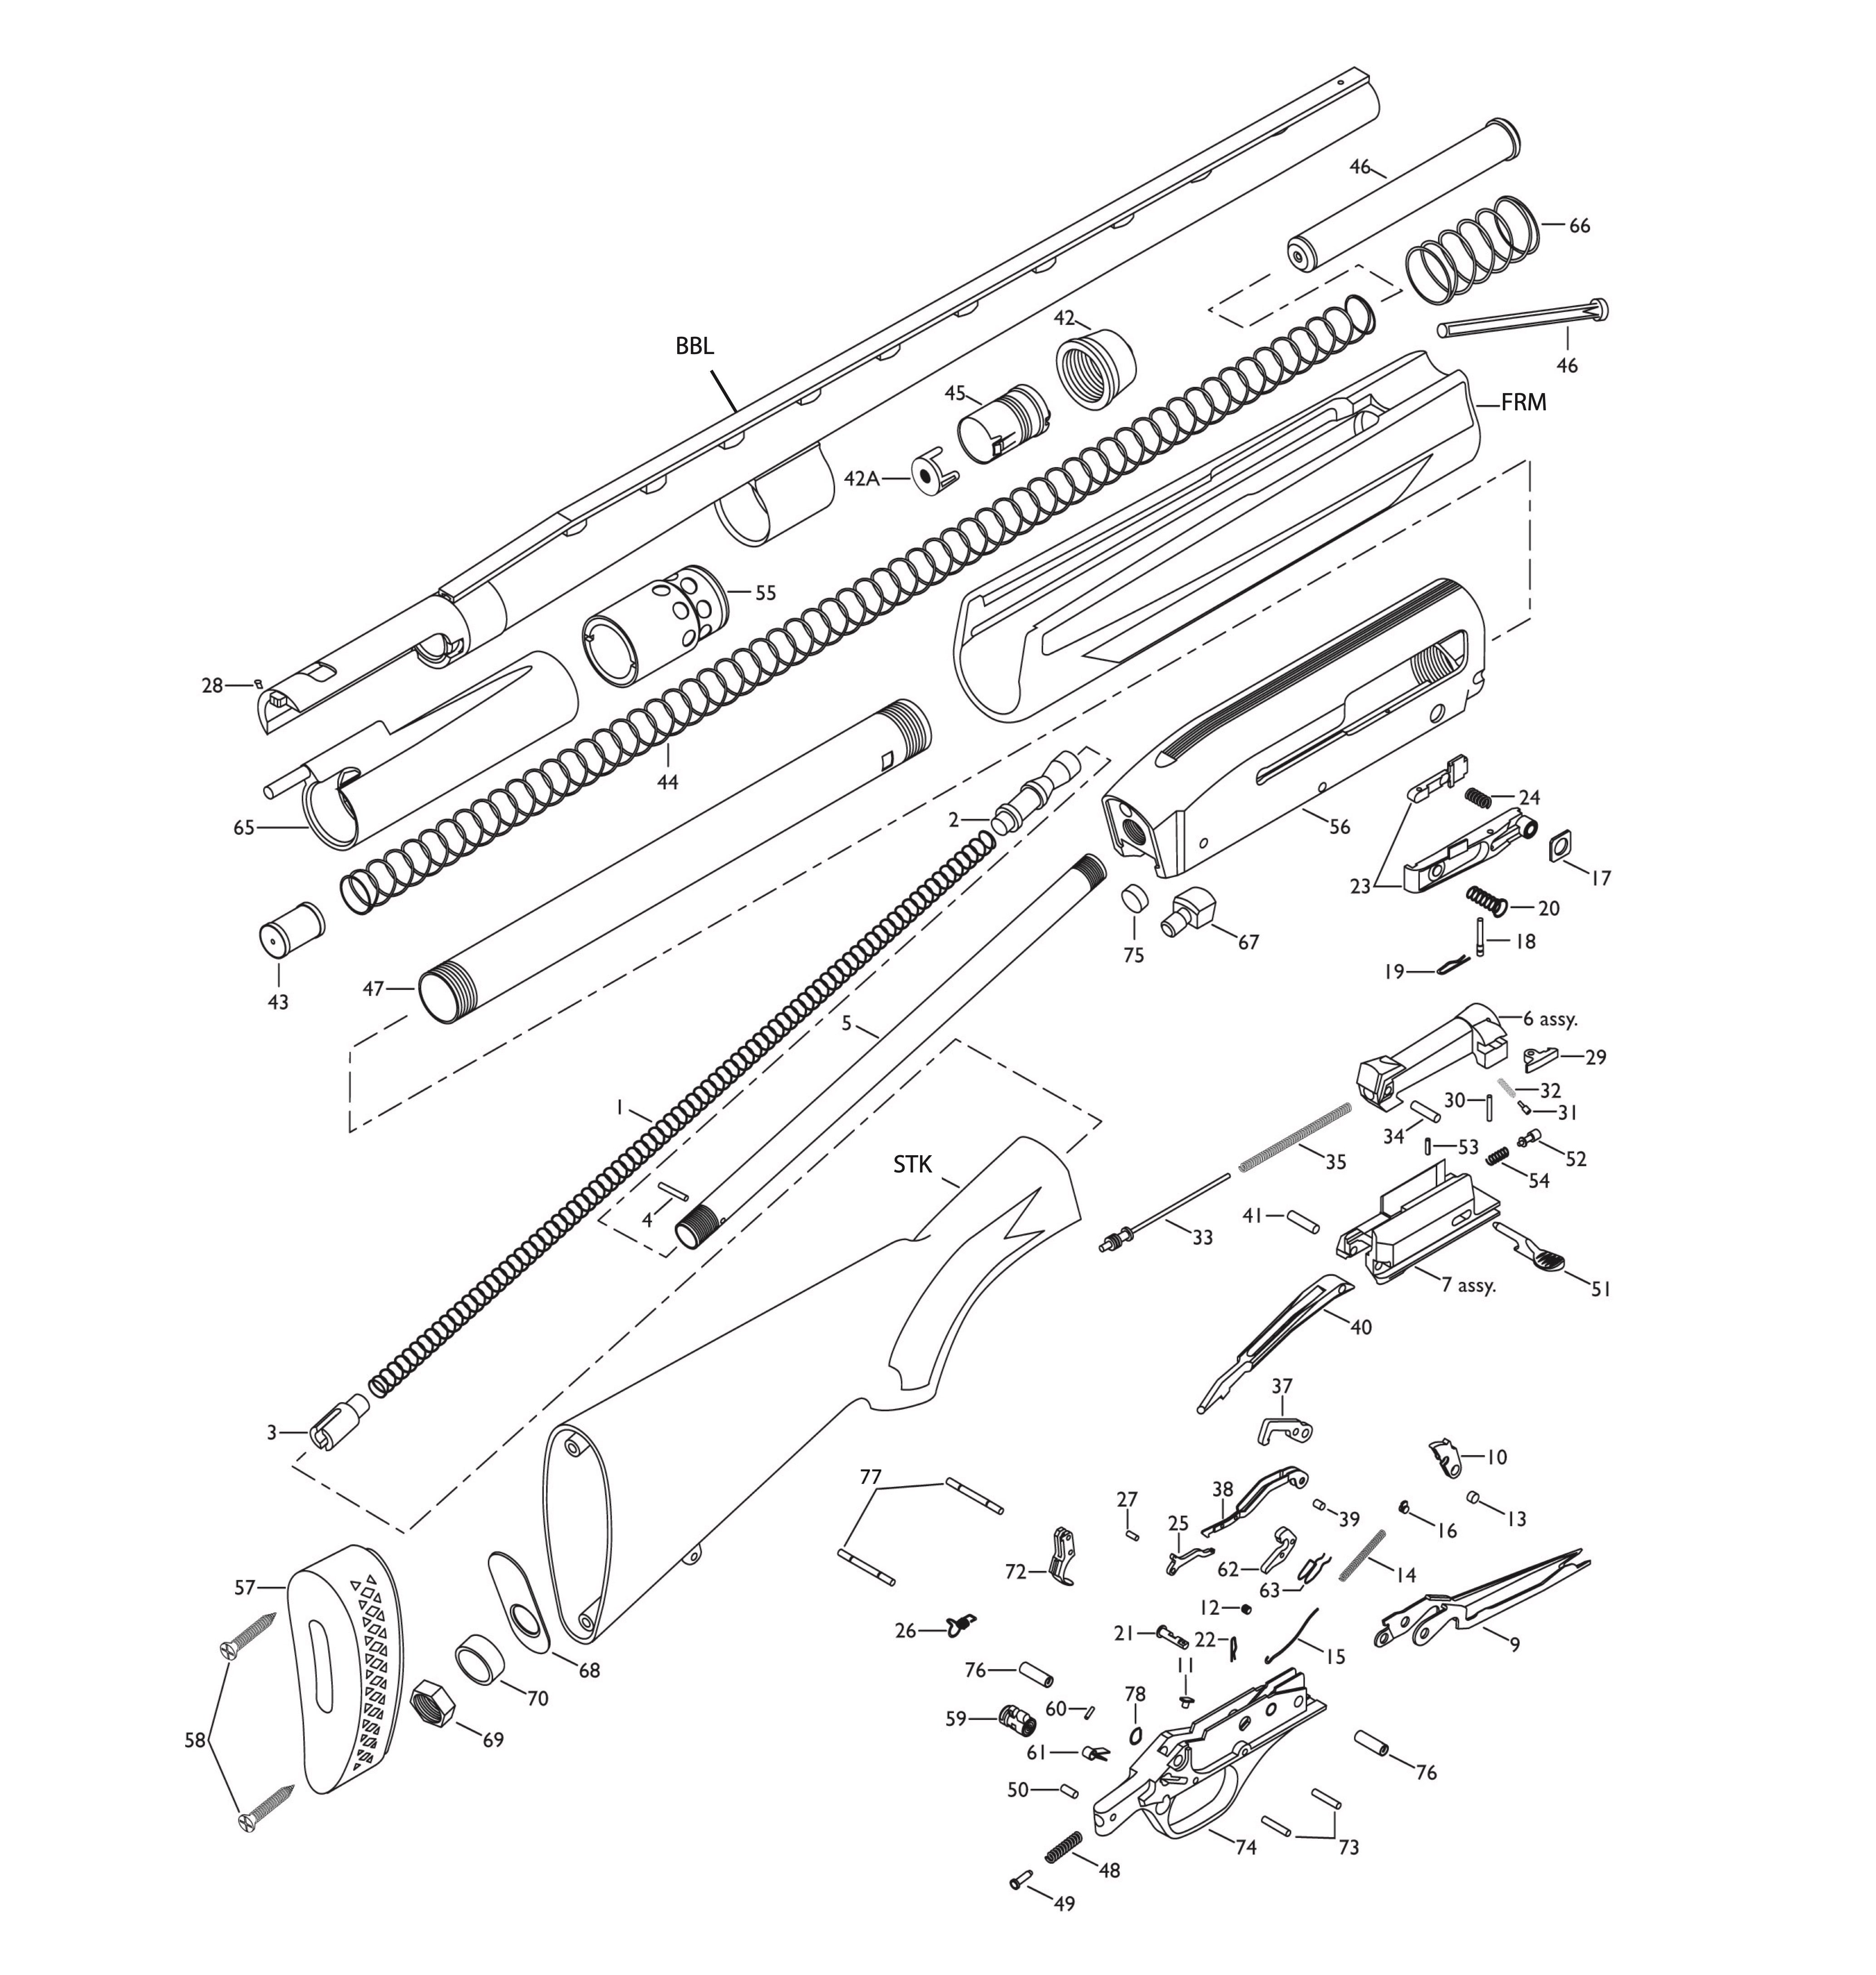 Original Replacement Parts for SX3 Shotgun